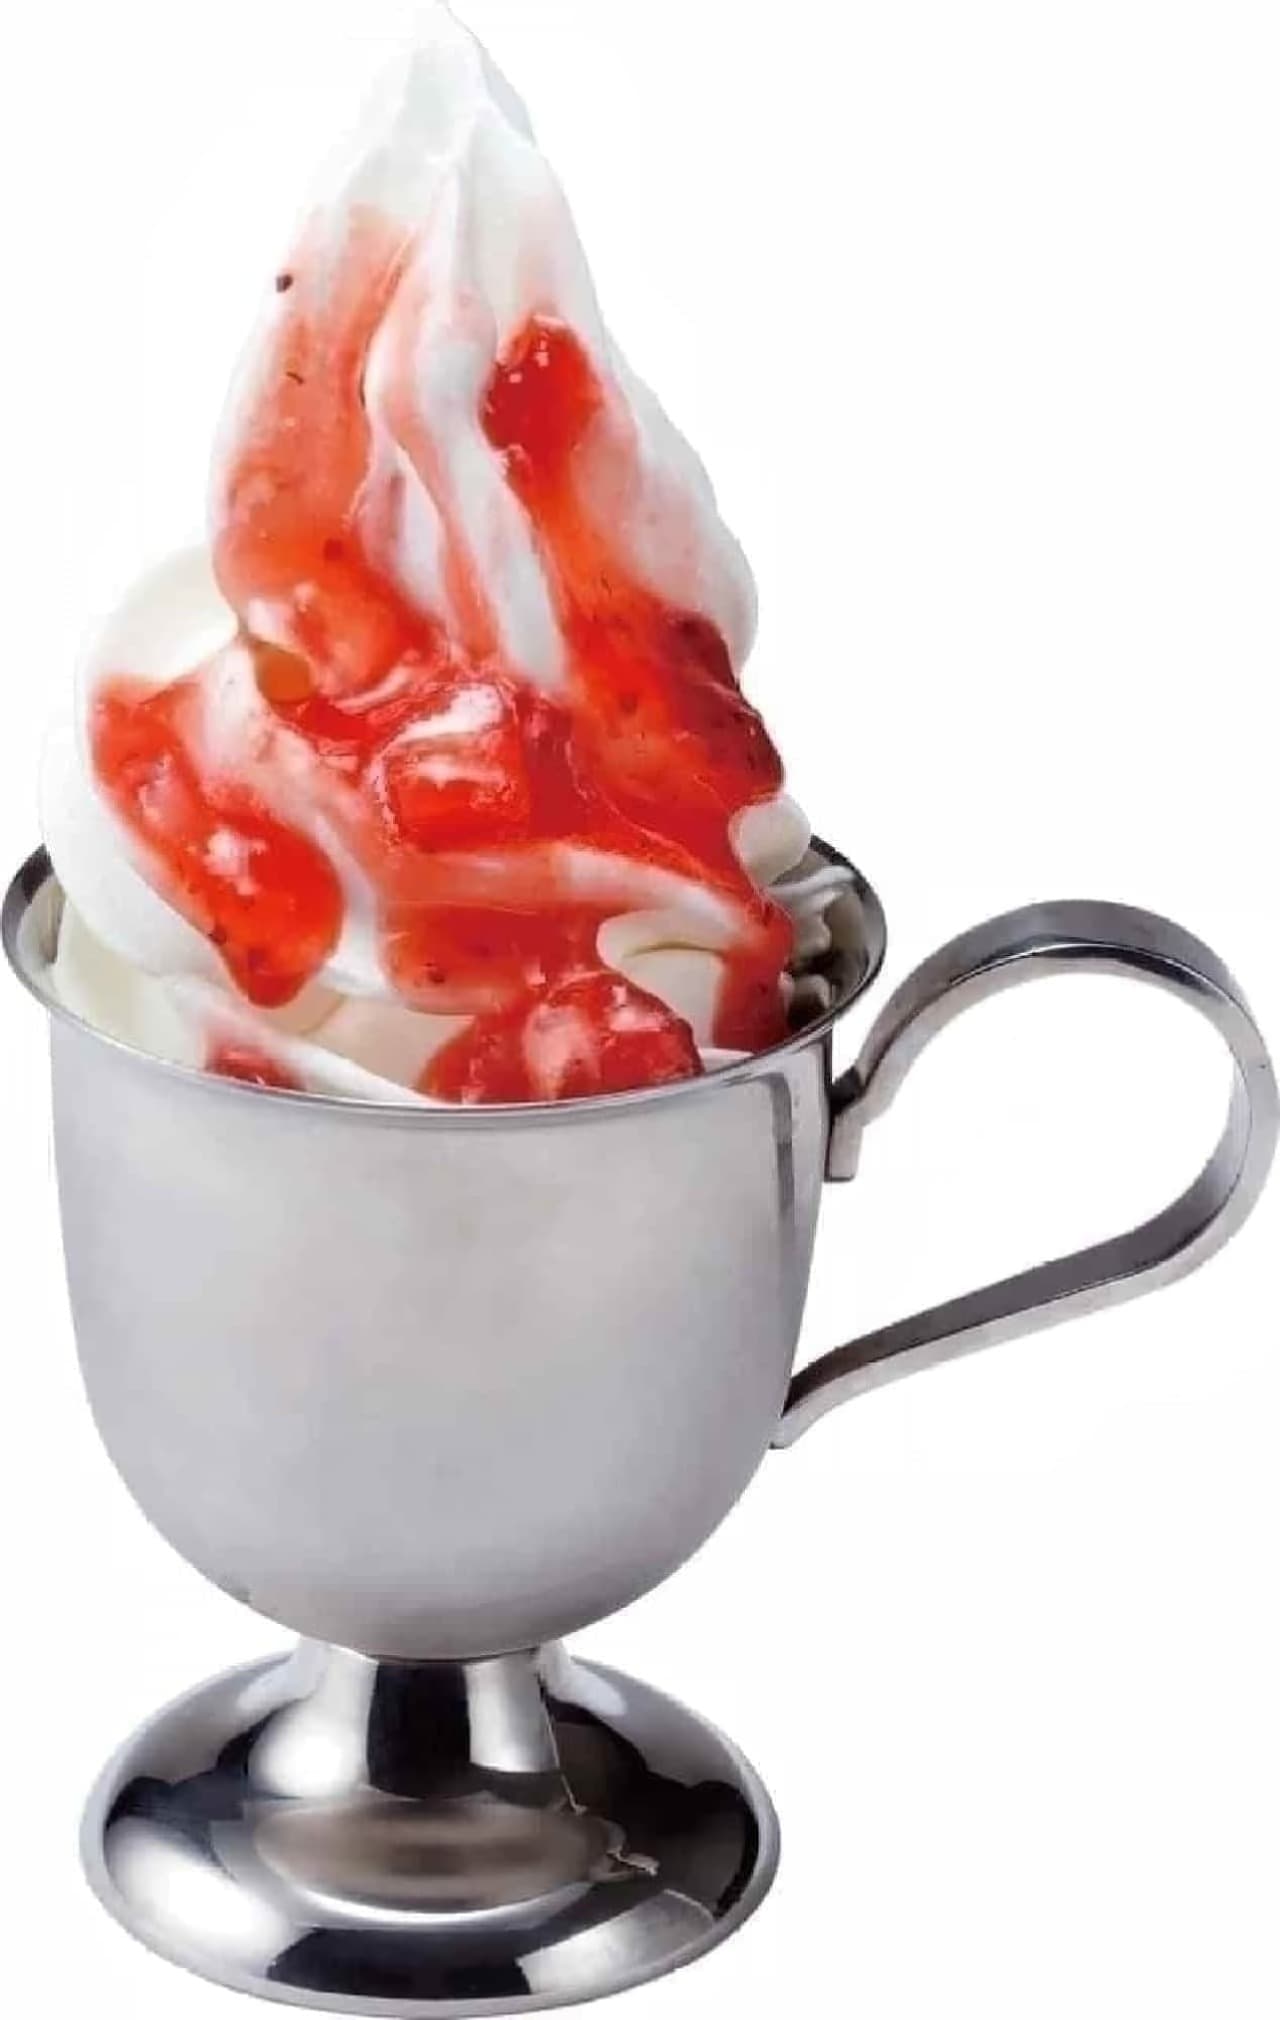 BIKKURI DONKEY "Hokkaido Soft Serve Ice Cream with Strawberry Sauce